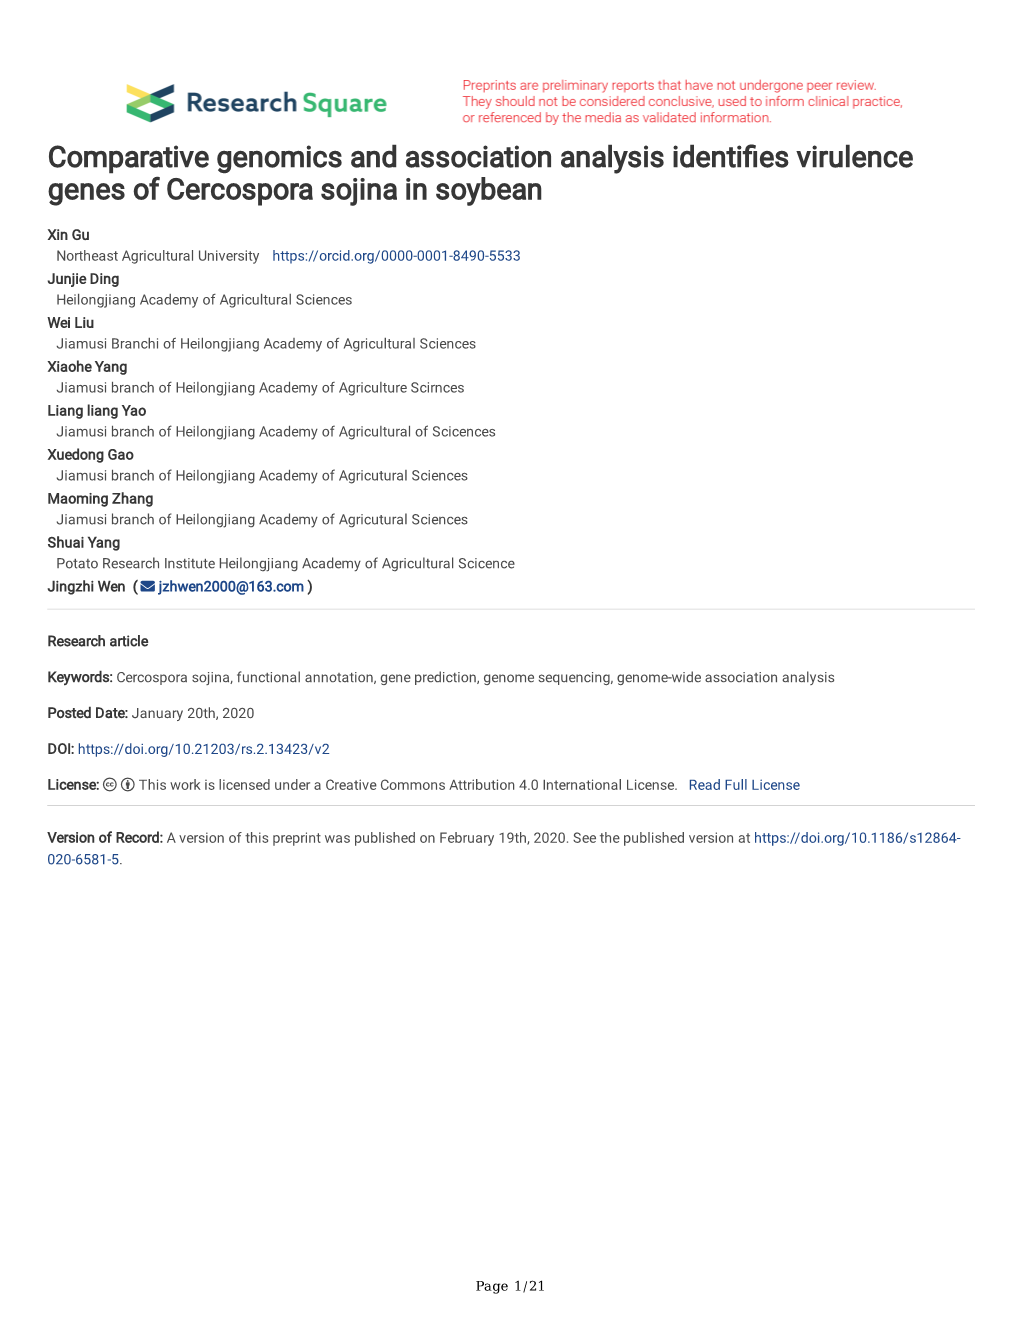 Comparative Genomics and Association Analysis Identifes Virulence Genes of Cercospora Sojina in Soybean